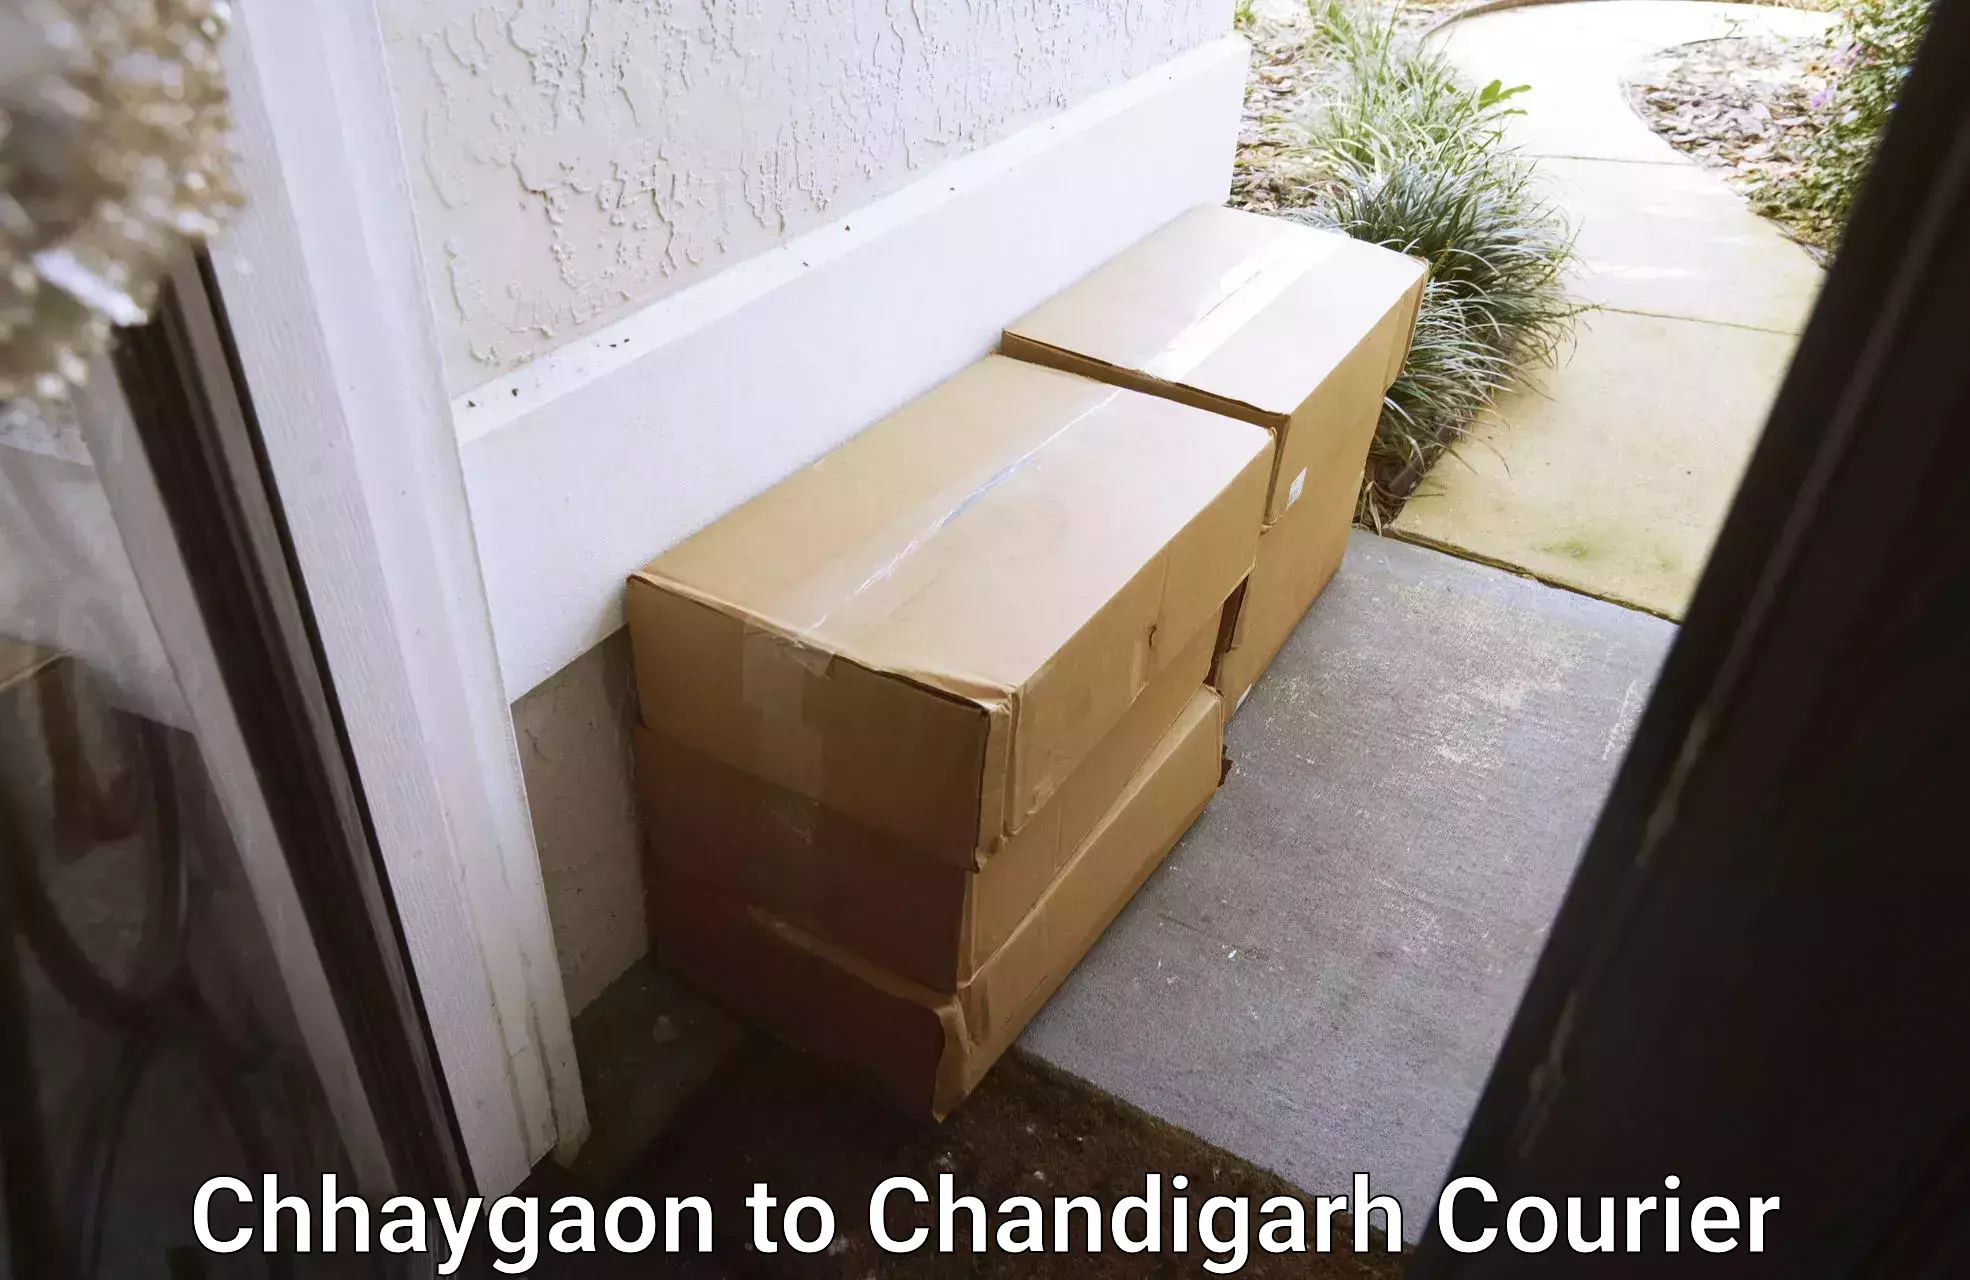 Urgent courier needs Chhaygaon to Chandigarh